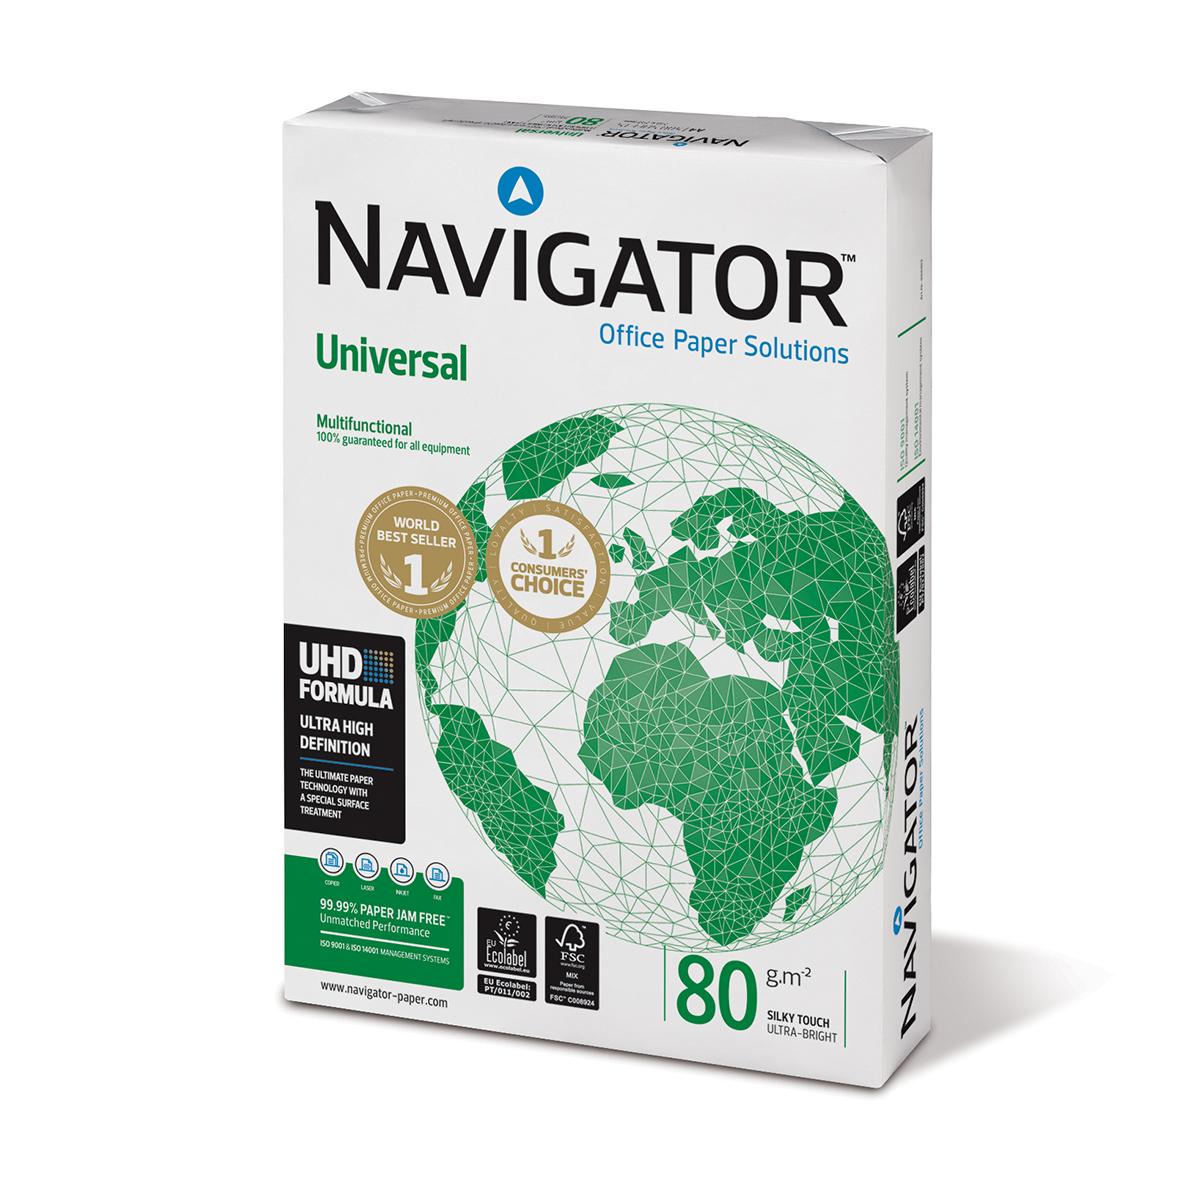 Hartie copiator Navigator Universal, A4, 80 g, 500 coli/top, 5 topuri/cutie